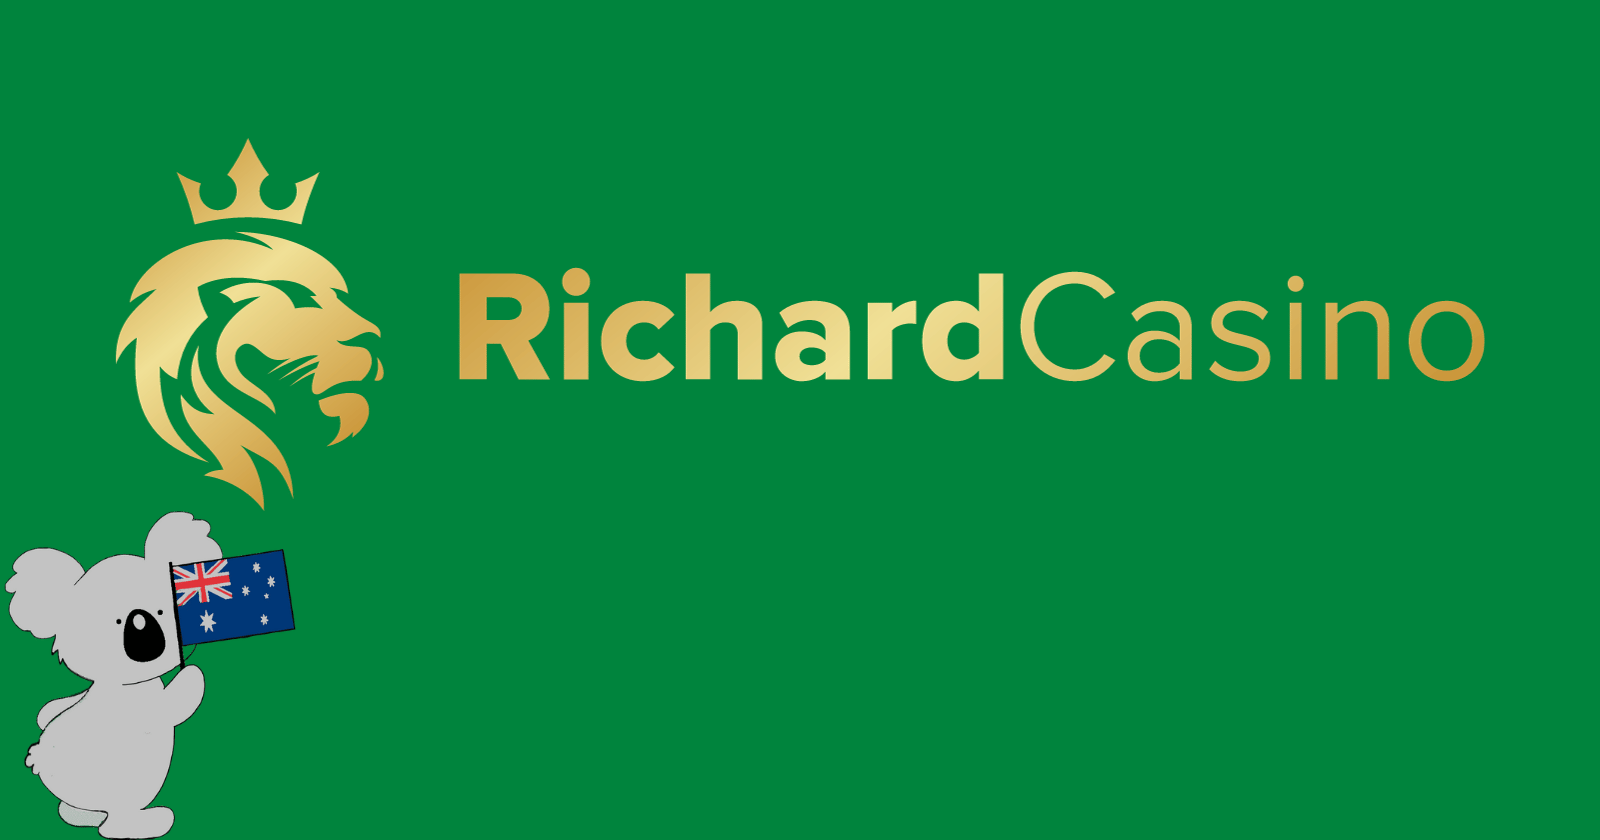 Richard Casino Banner